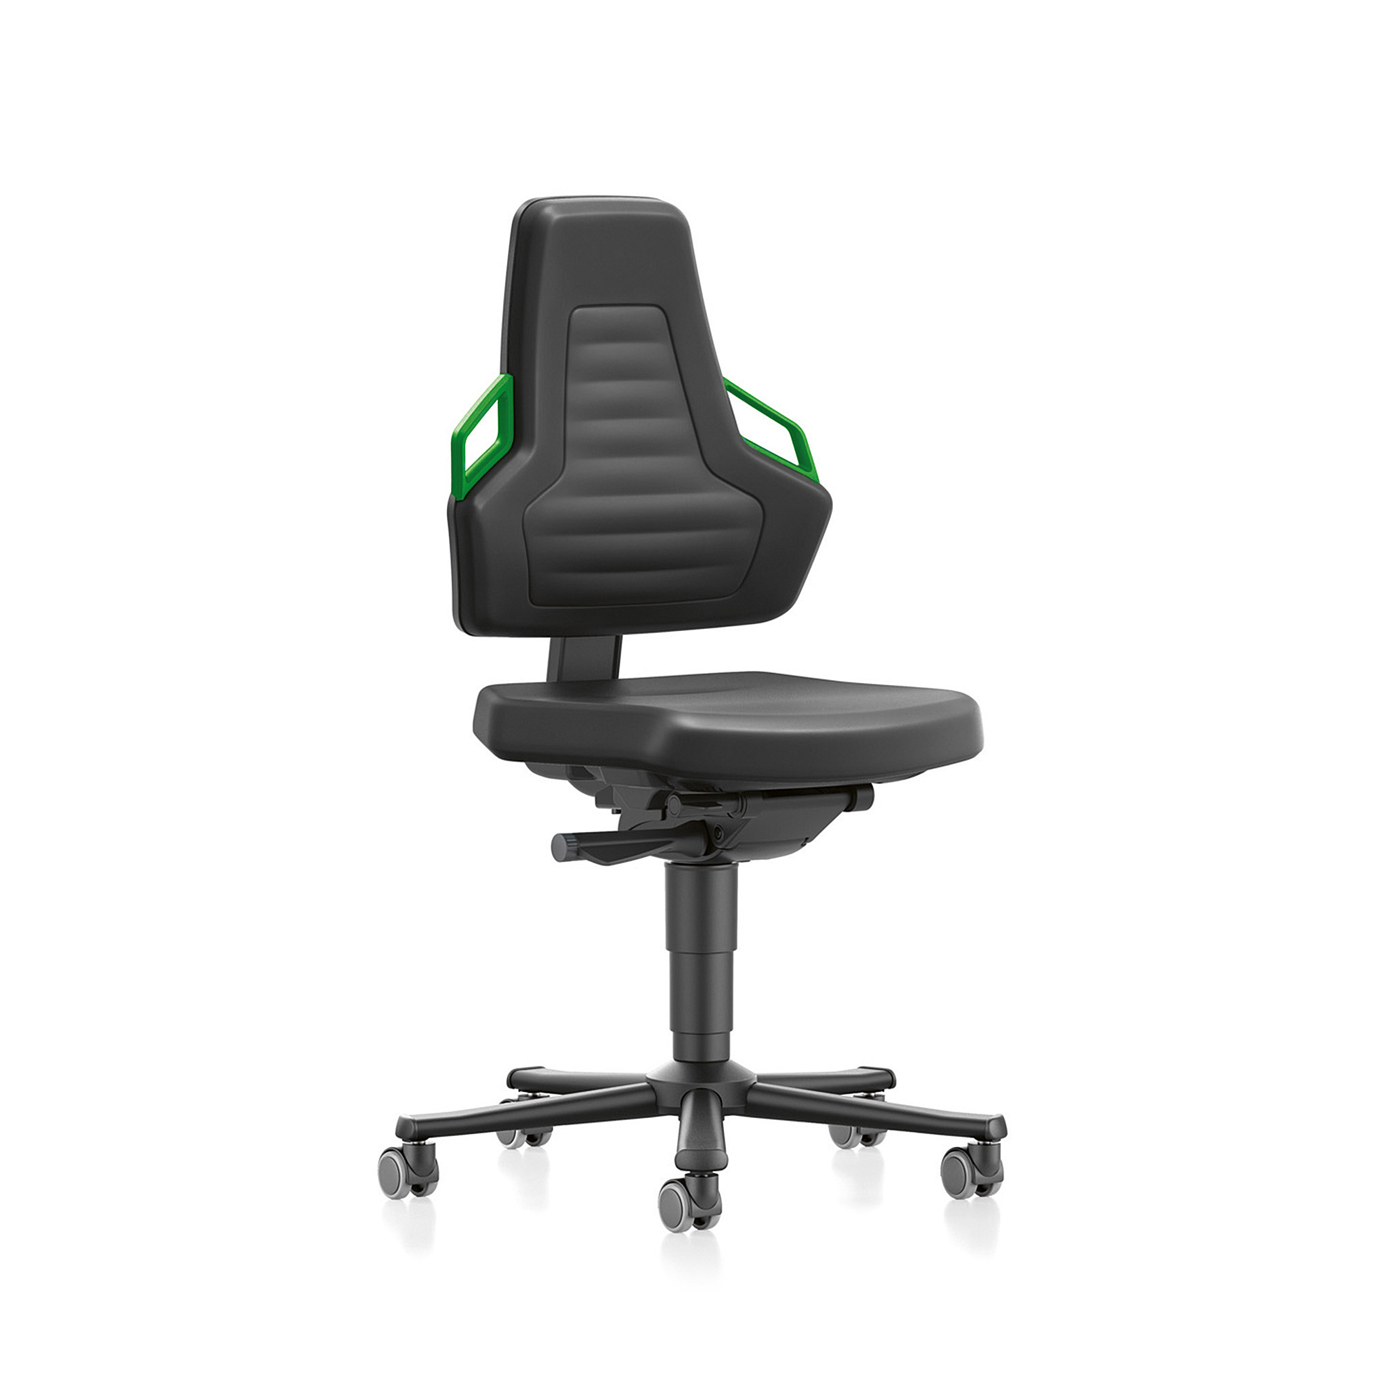 Nexxit 2 Swivel Chair, Integral Foam Black/Green - 1 piece